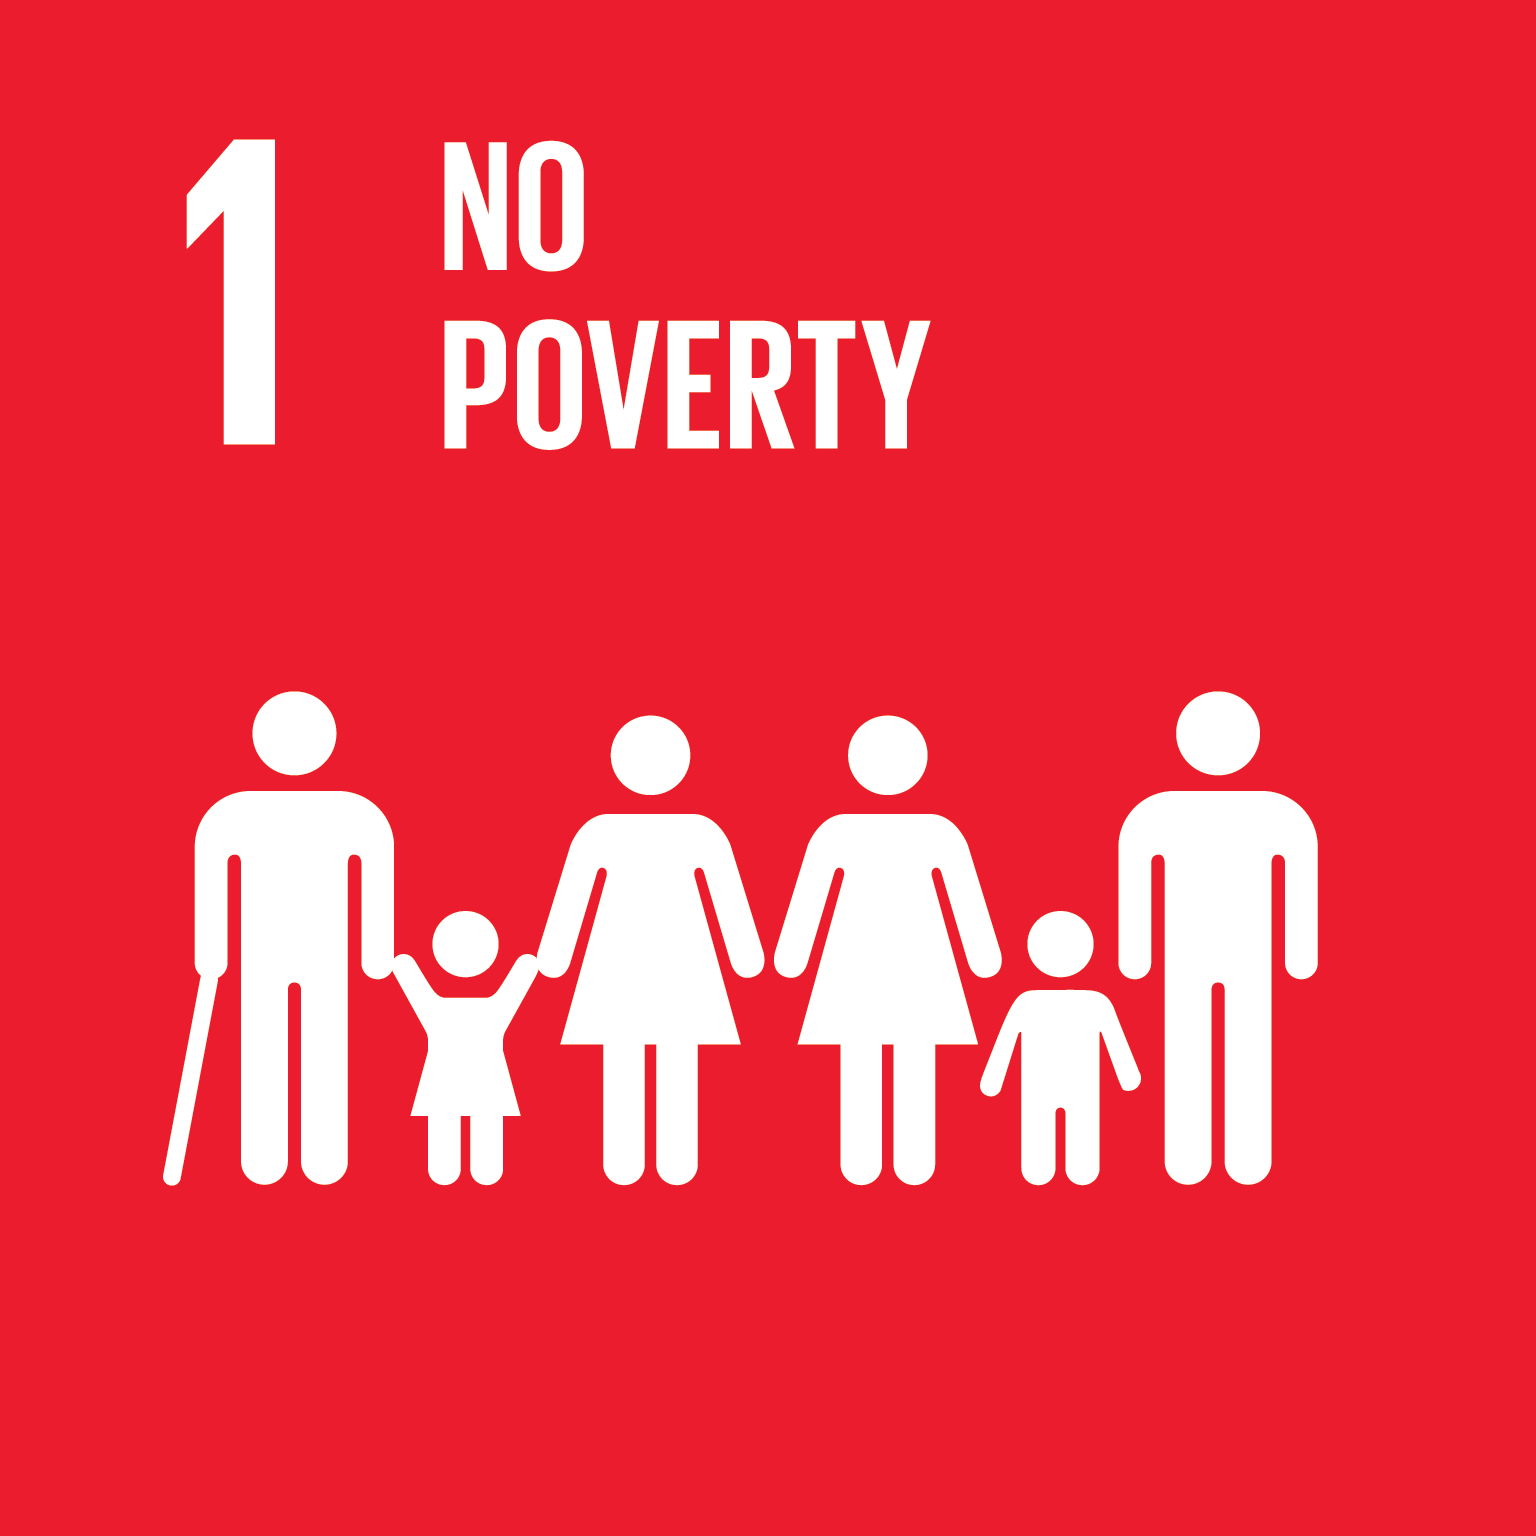 UN Sustainable Development Goals - 01 - No Poverty